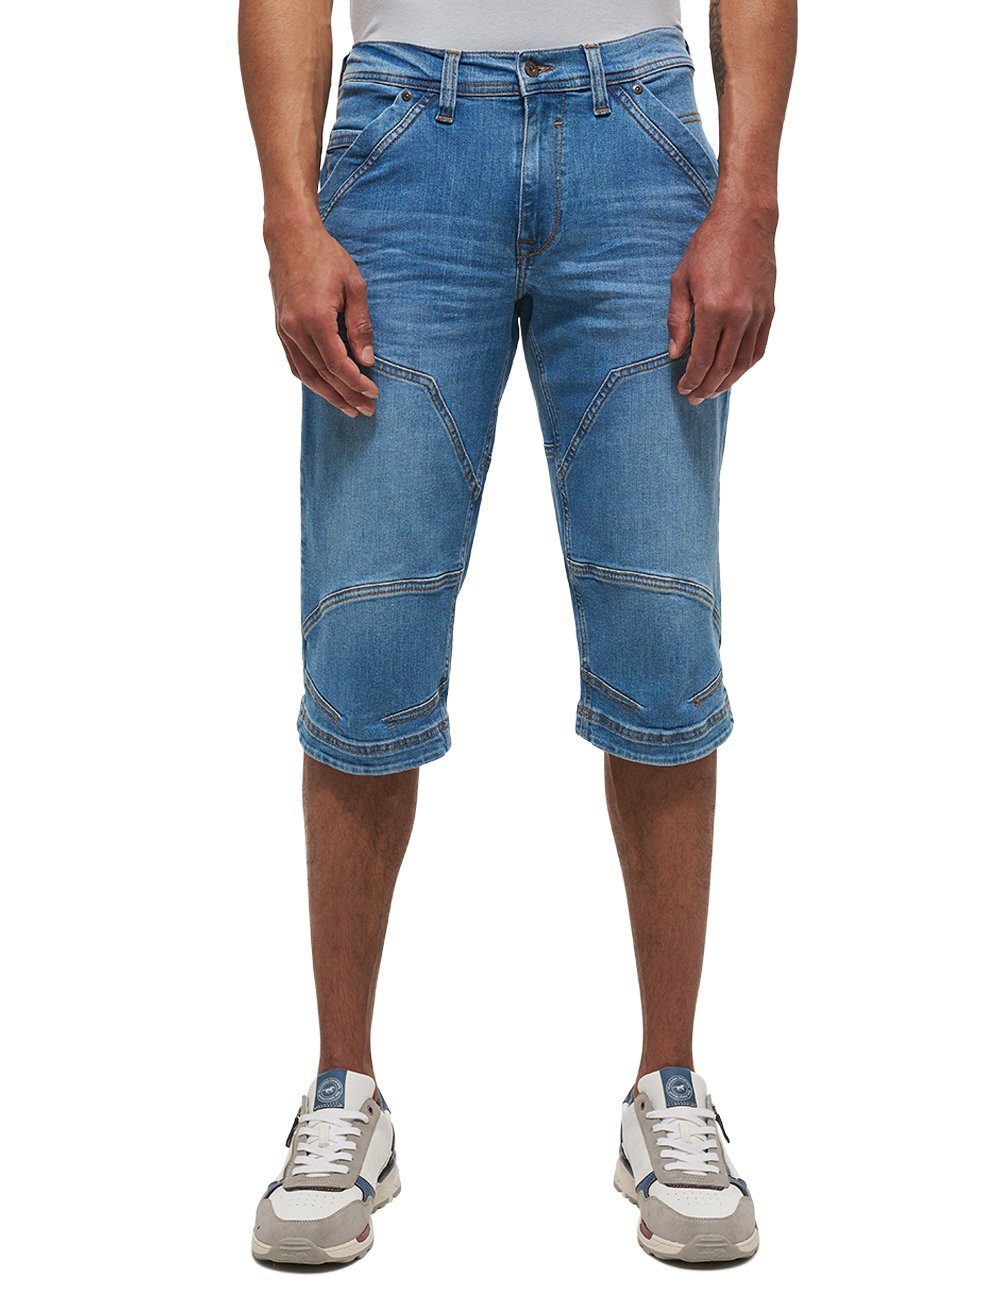 MUSTANG Style blau-5000583 Jeansshorts Shorts Fremont